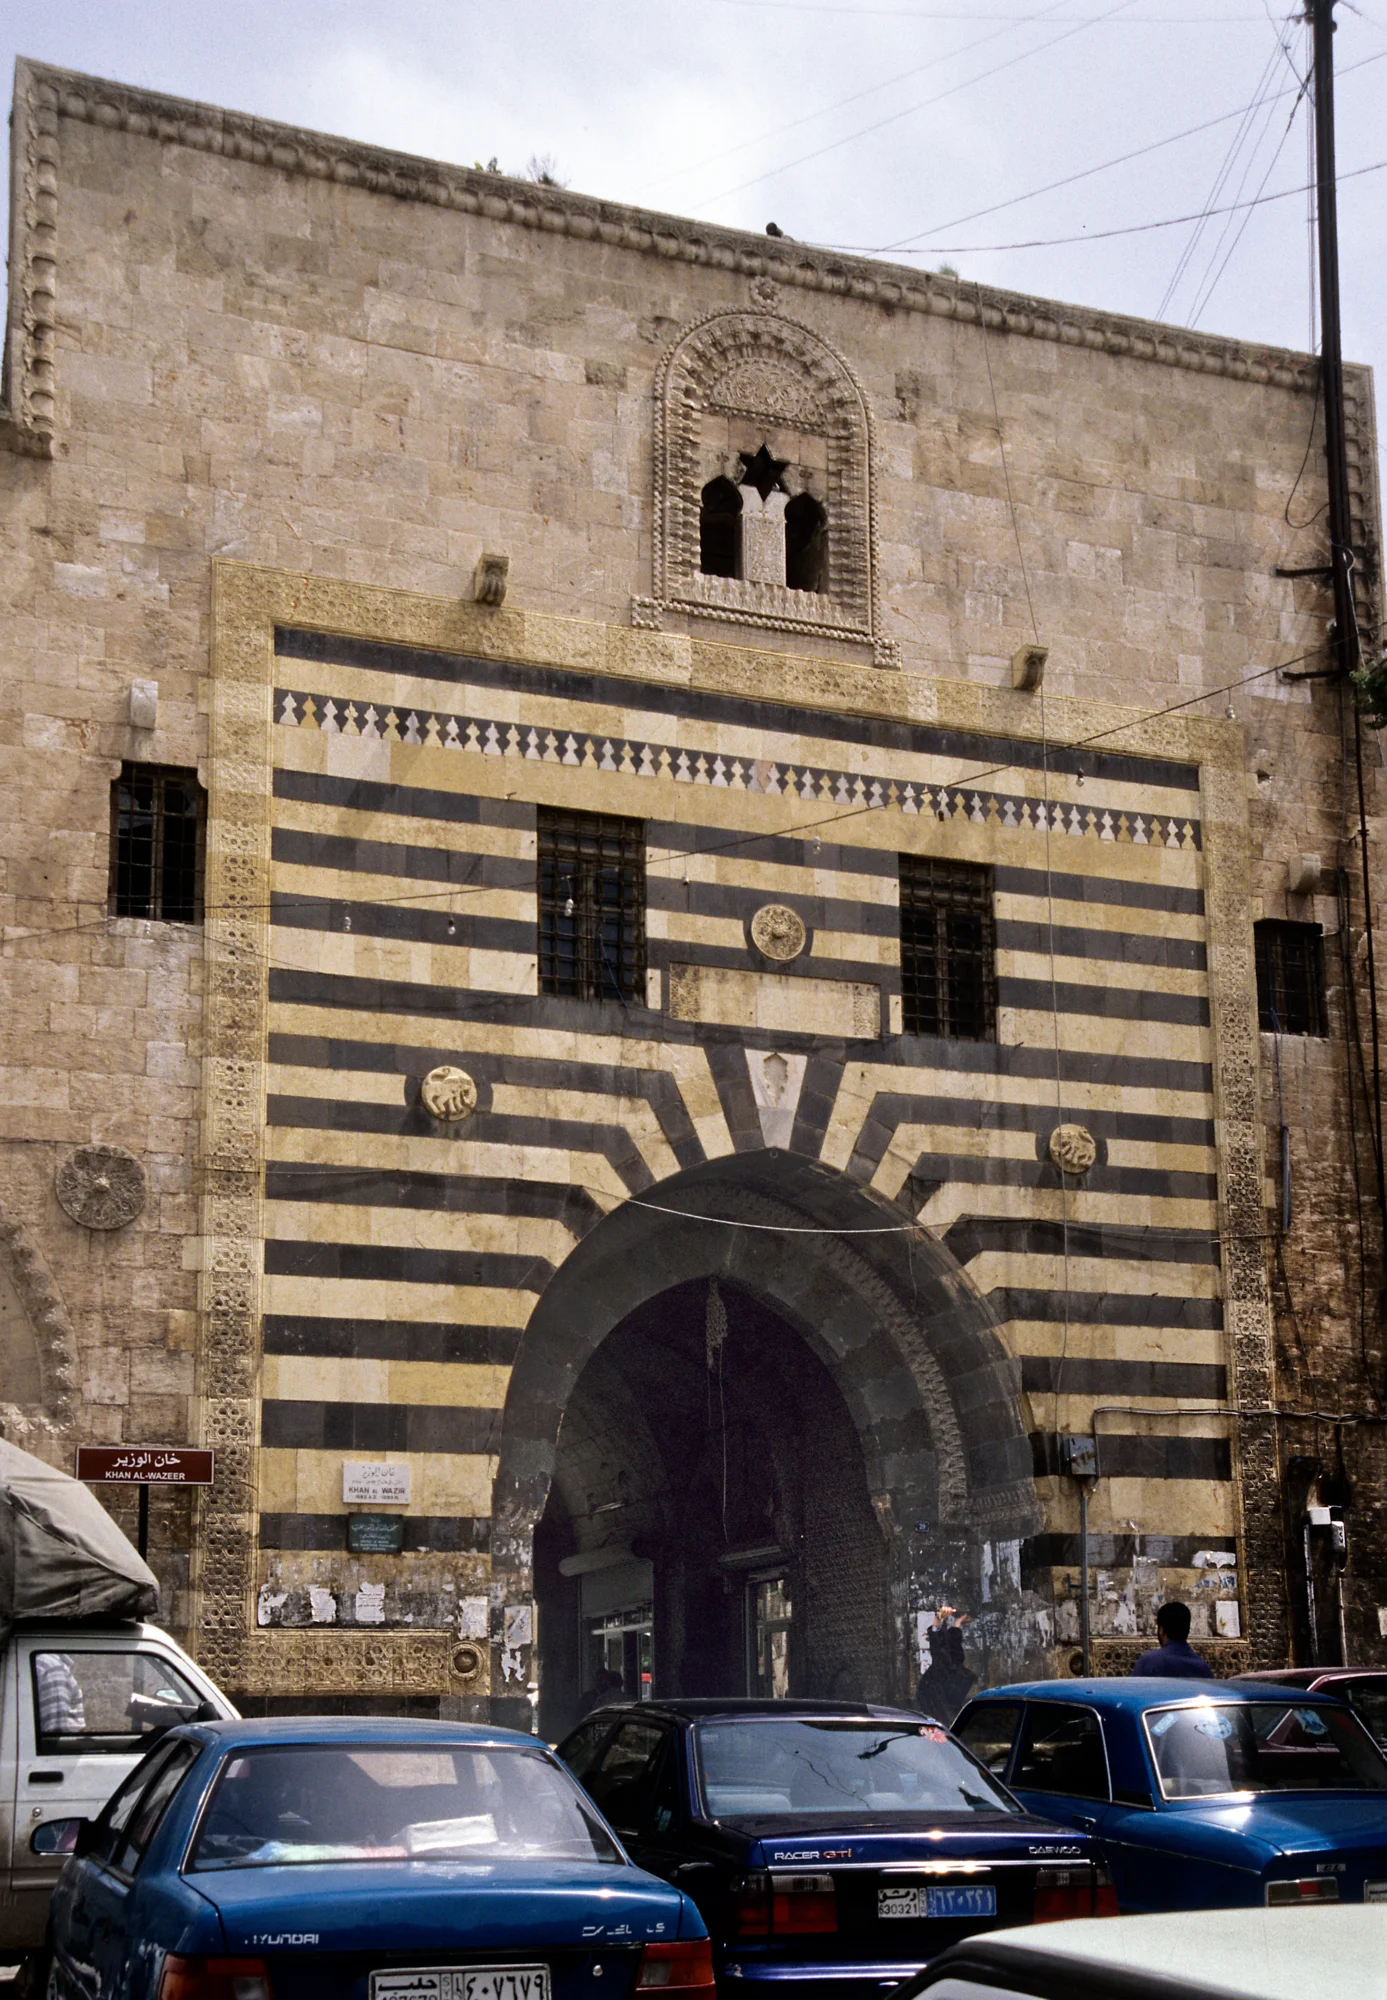 Khan al-Wazir, main entrance